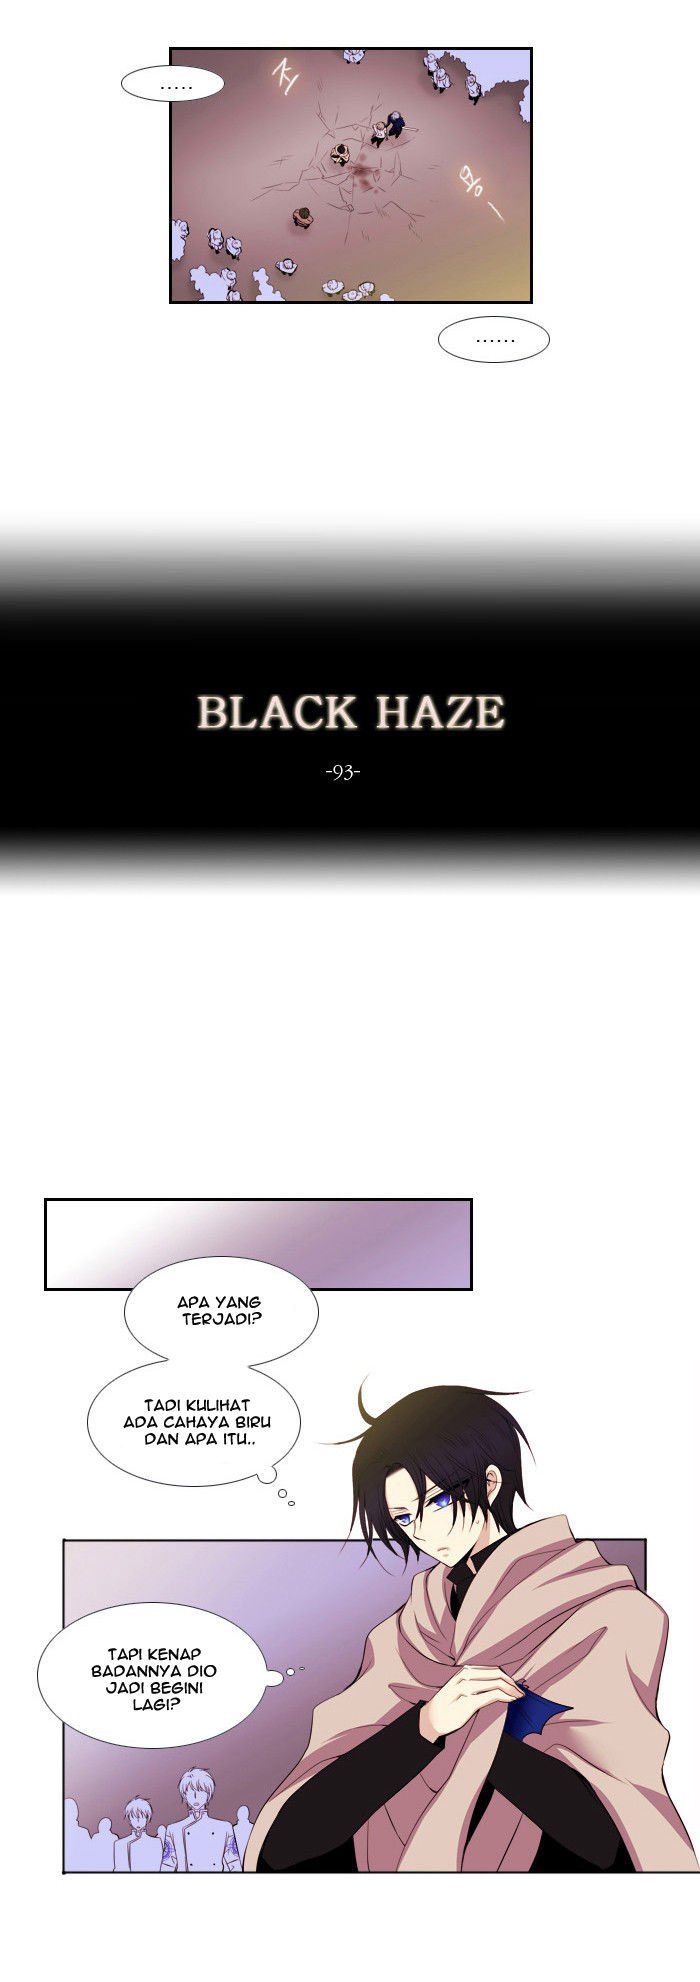 Black Haze Chapter 93